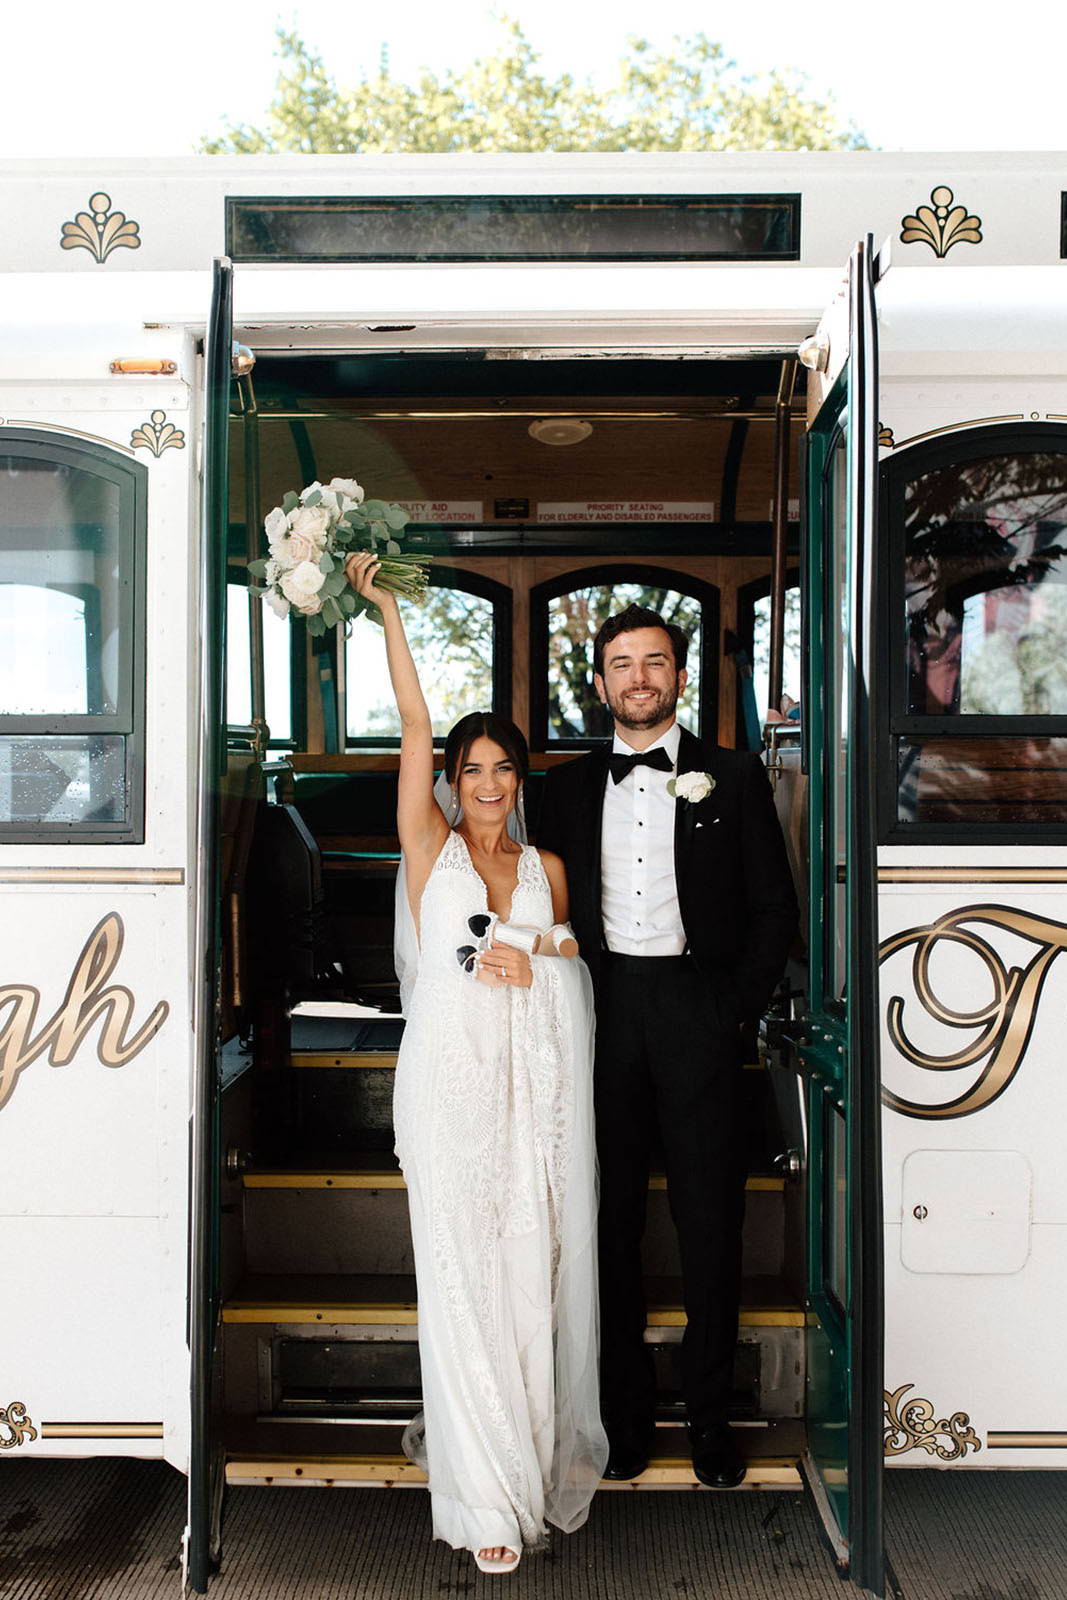 Bride and groom standing on wedding bus